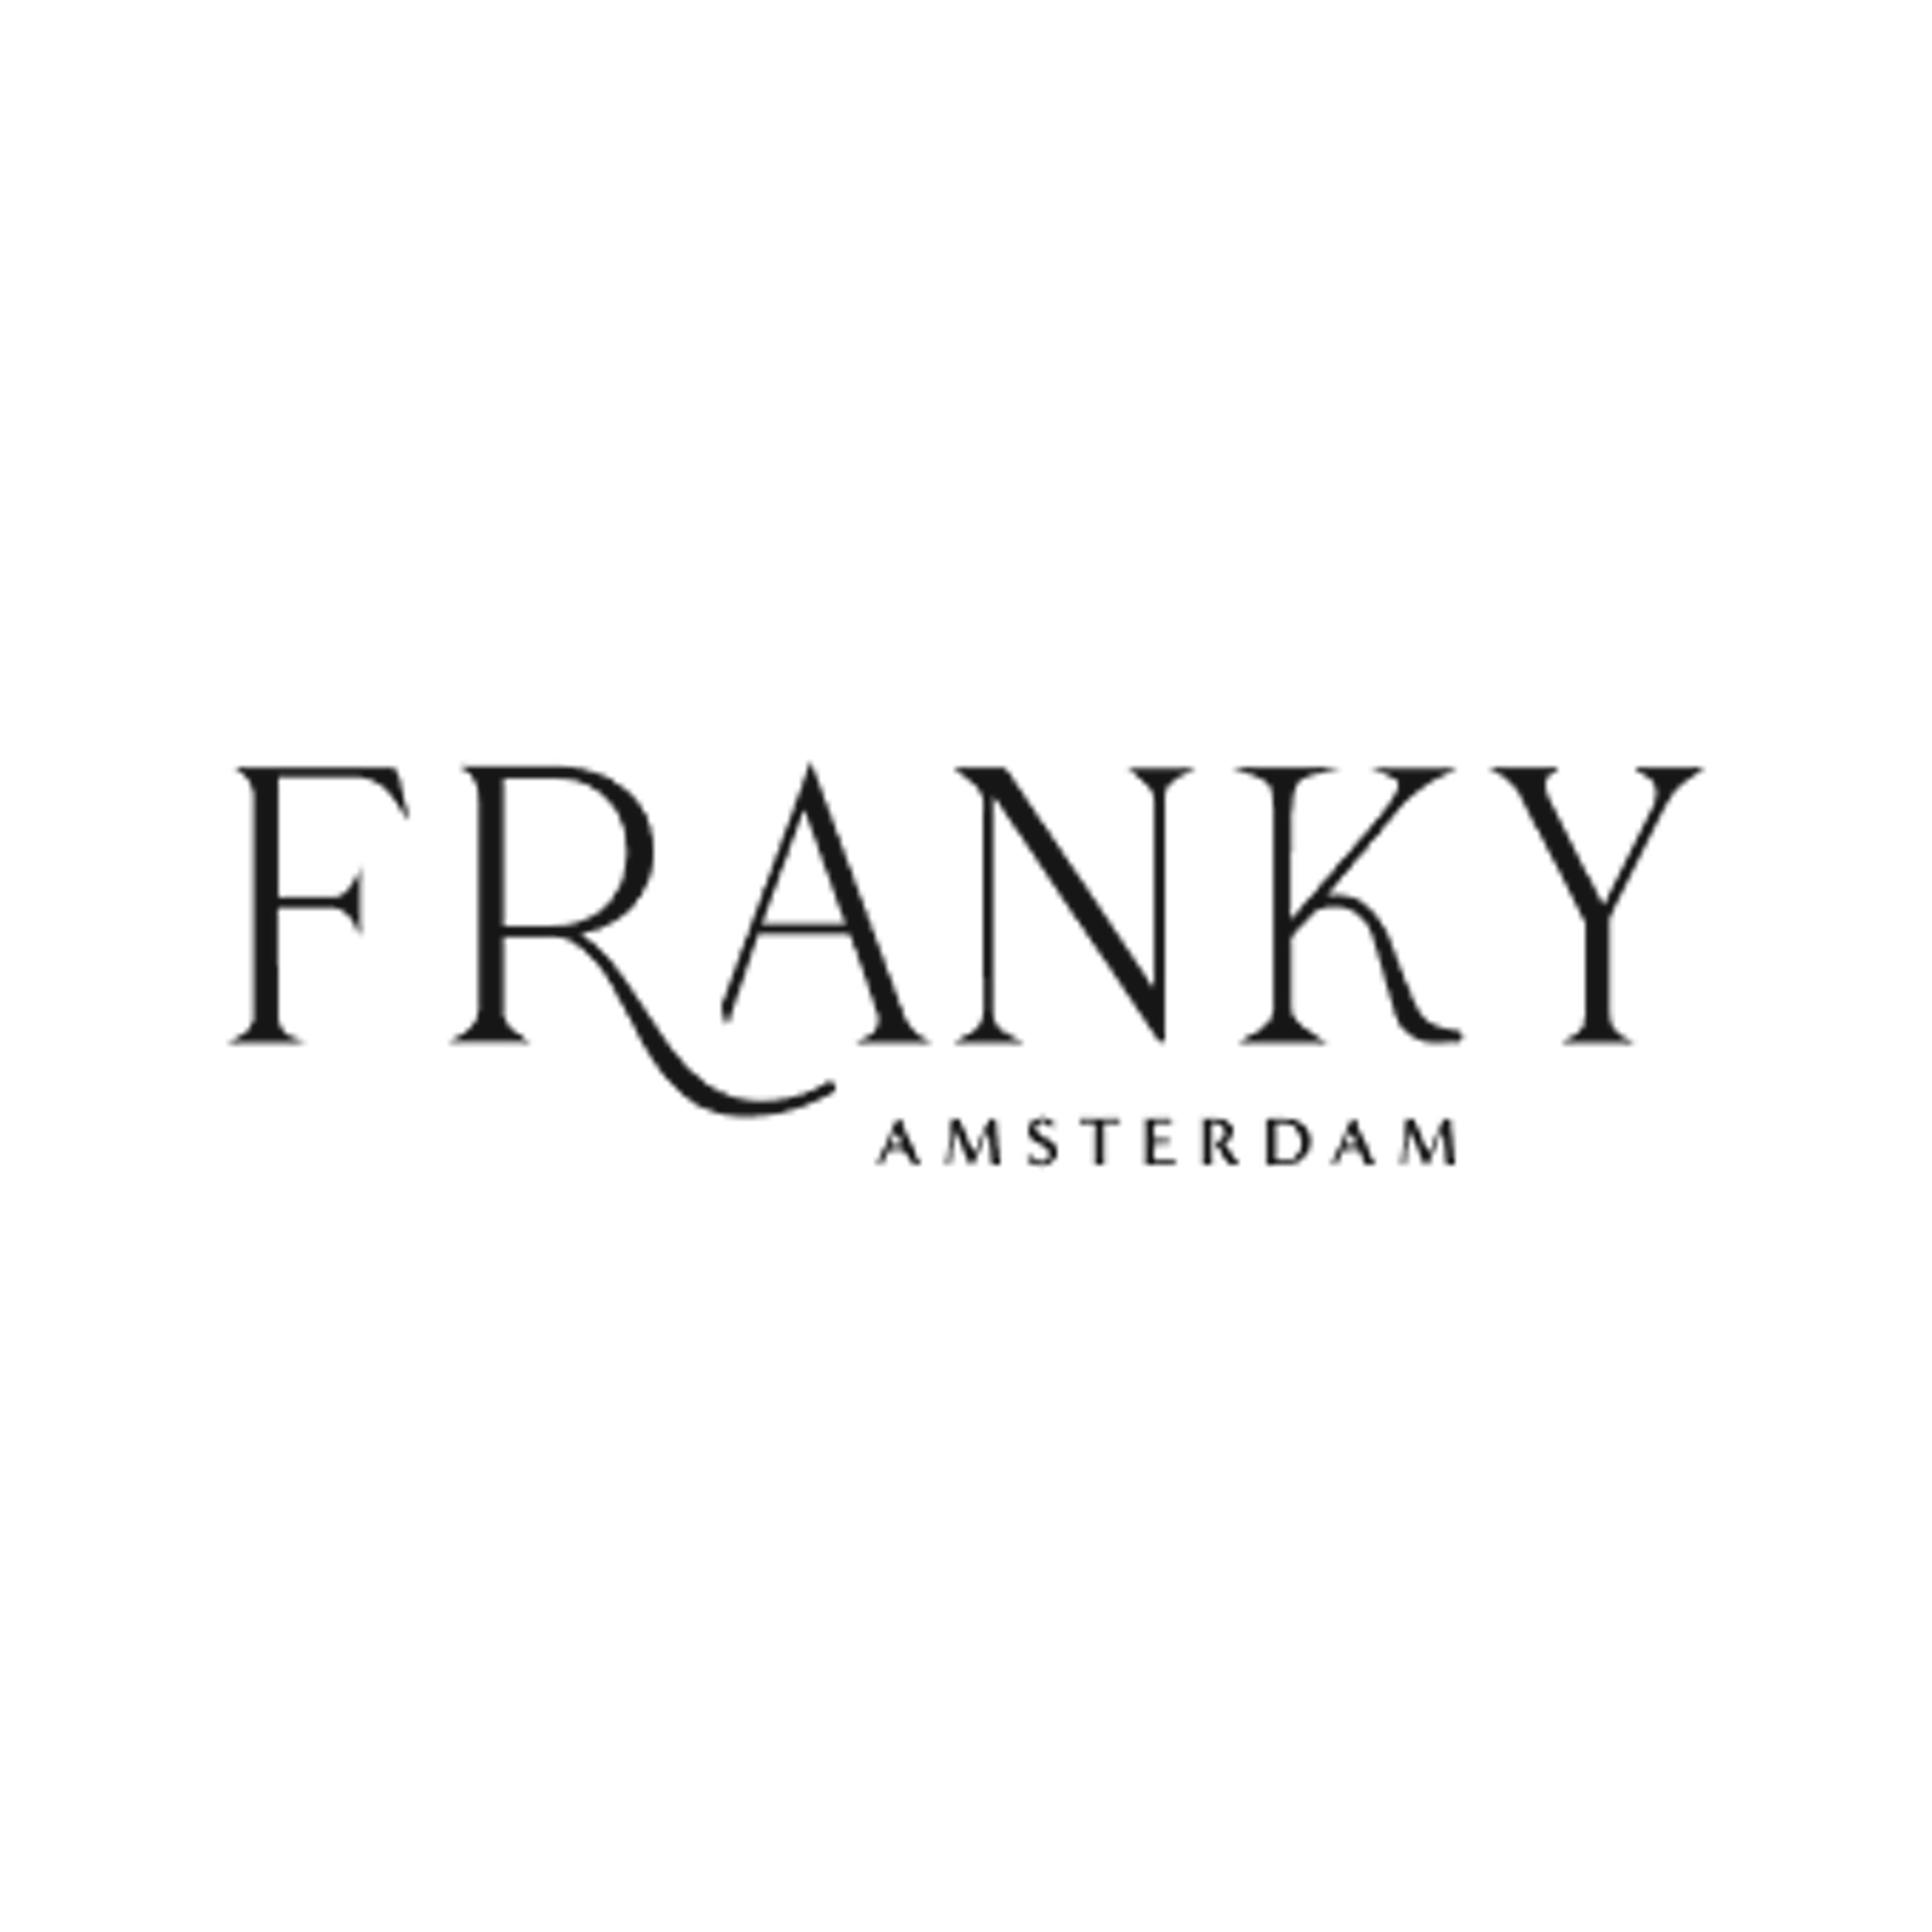 Franky Amsterdam